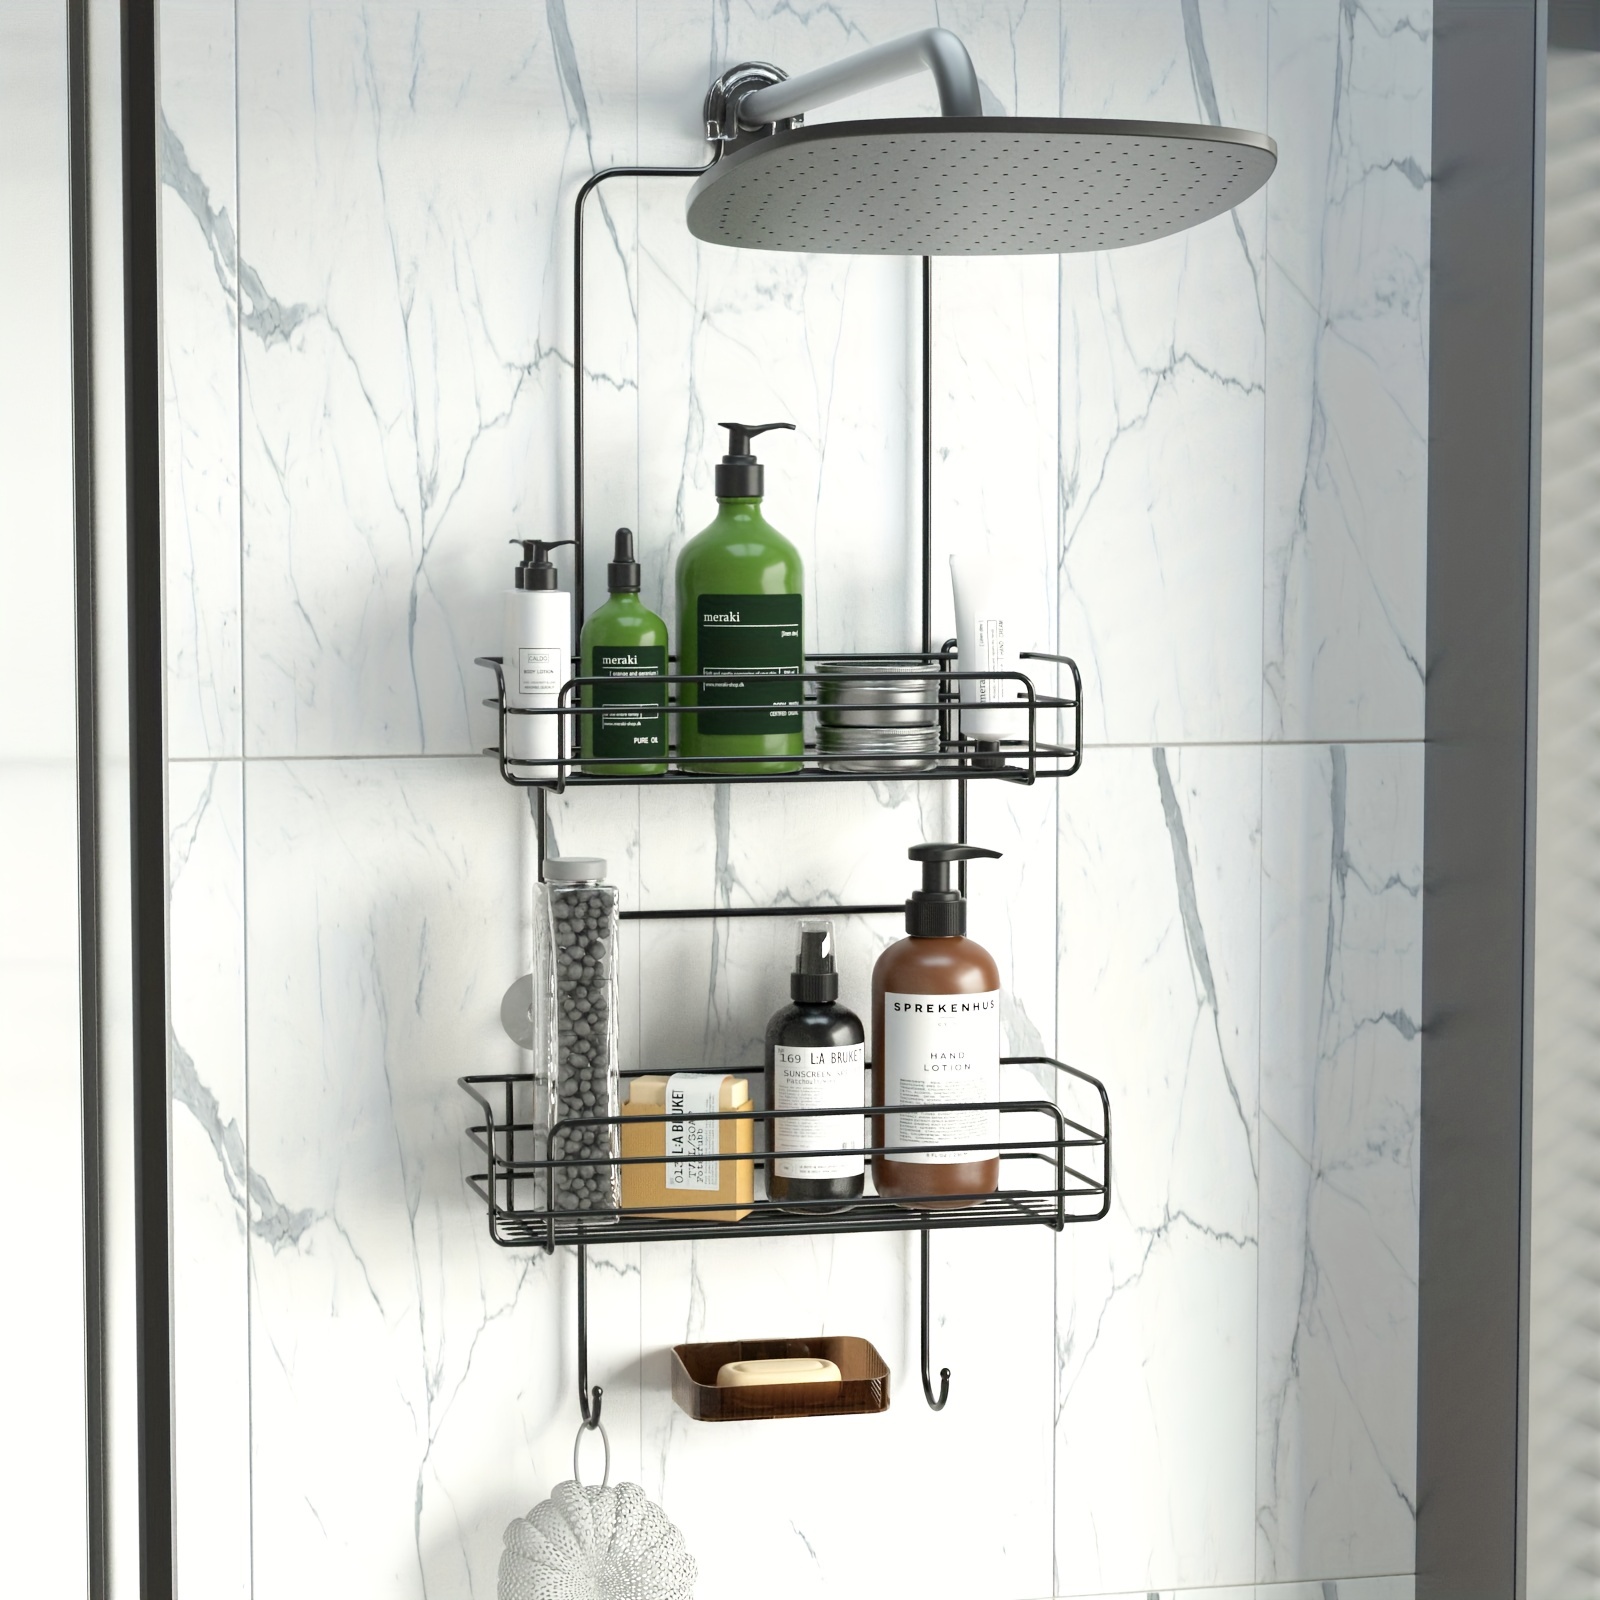 1pc Stainless Steel Shower Shelves, Self Adhesive Shower Organizer